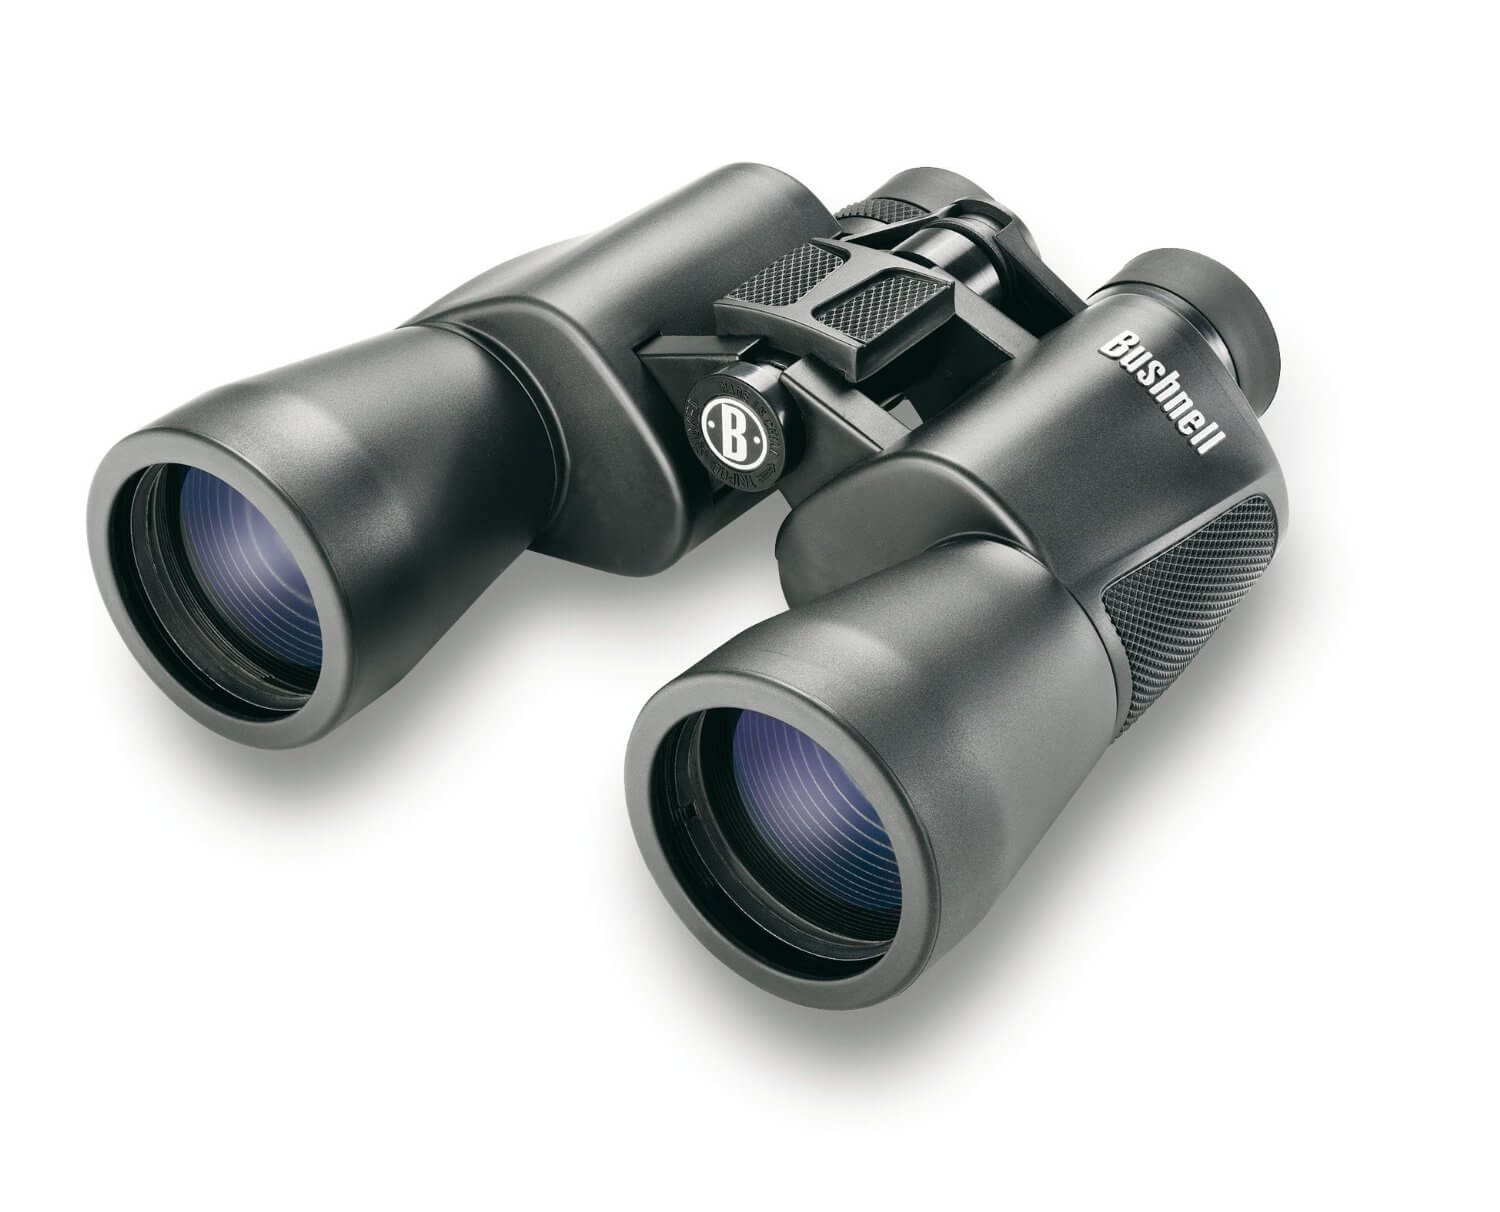 Bushnell PowerView 20x50 Super High-Powered Surveillance Binoculars